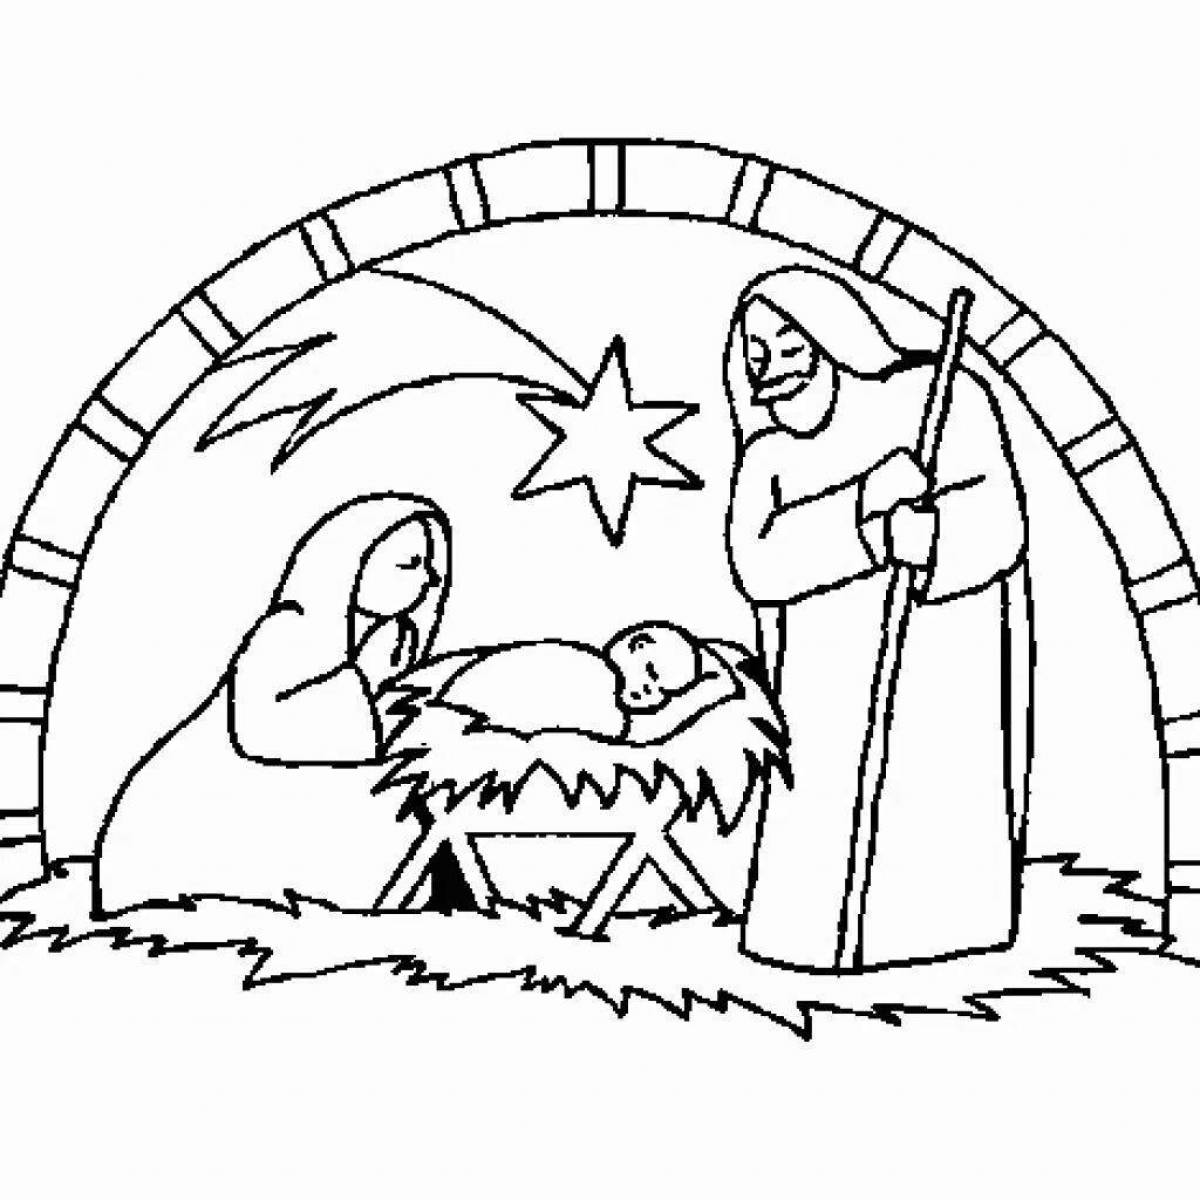 Sky nativity scene coloring page